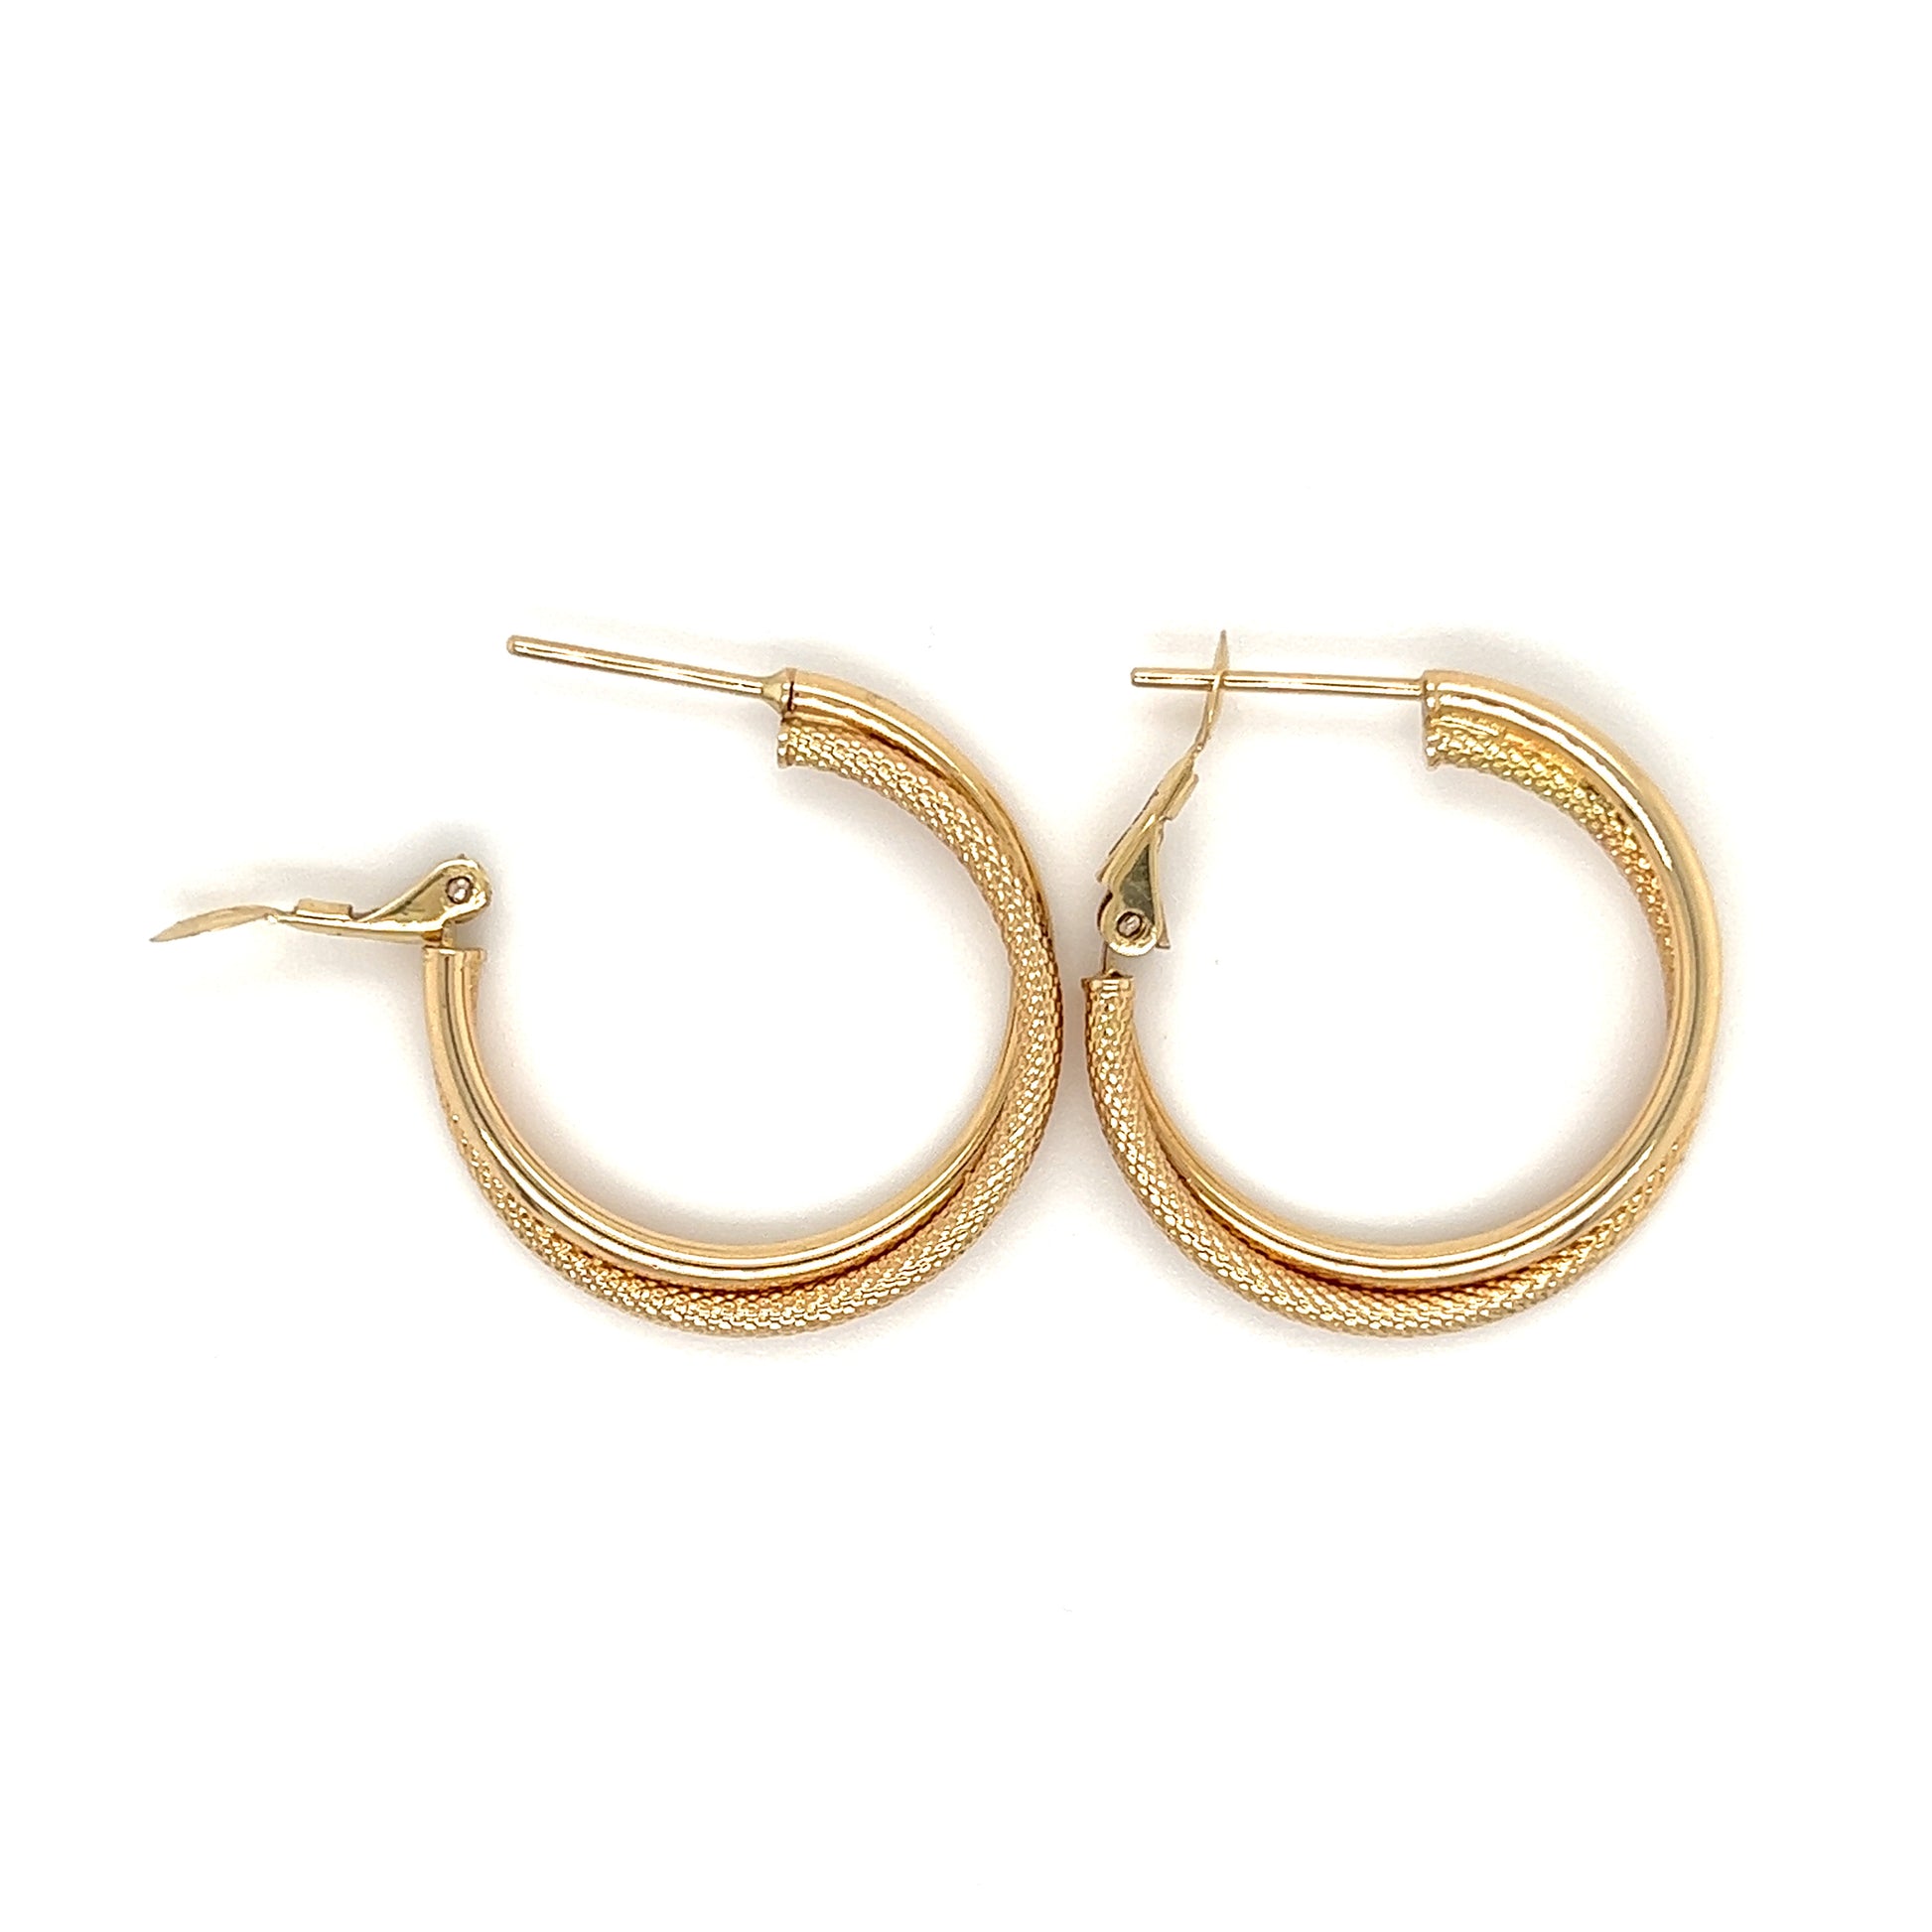 Double Hoop Earrings in 14K Yellow Gold Top View Omega Bank Open